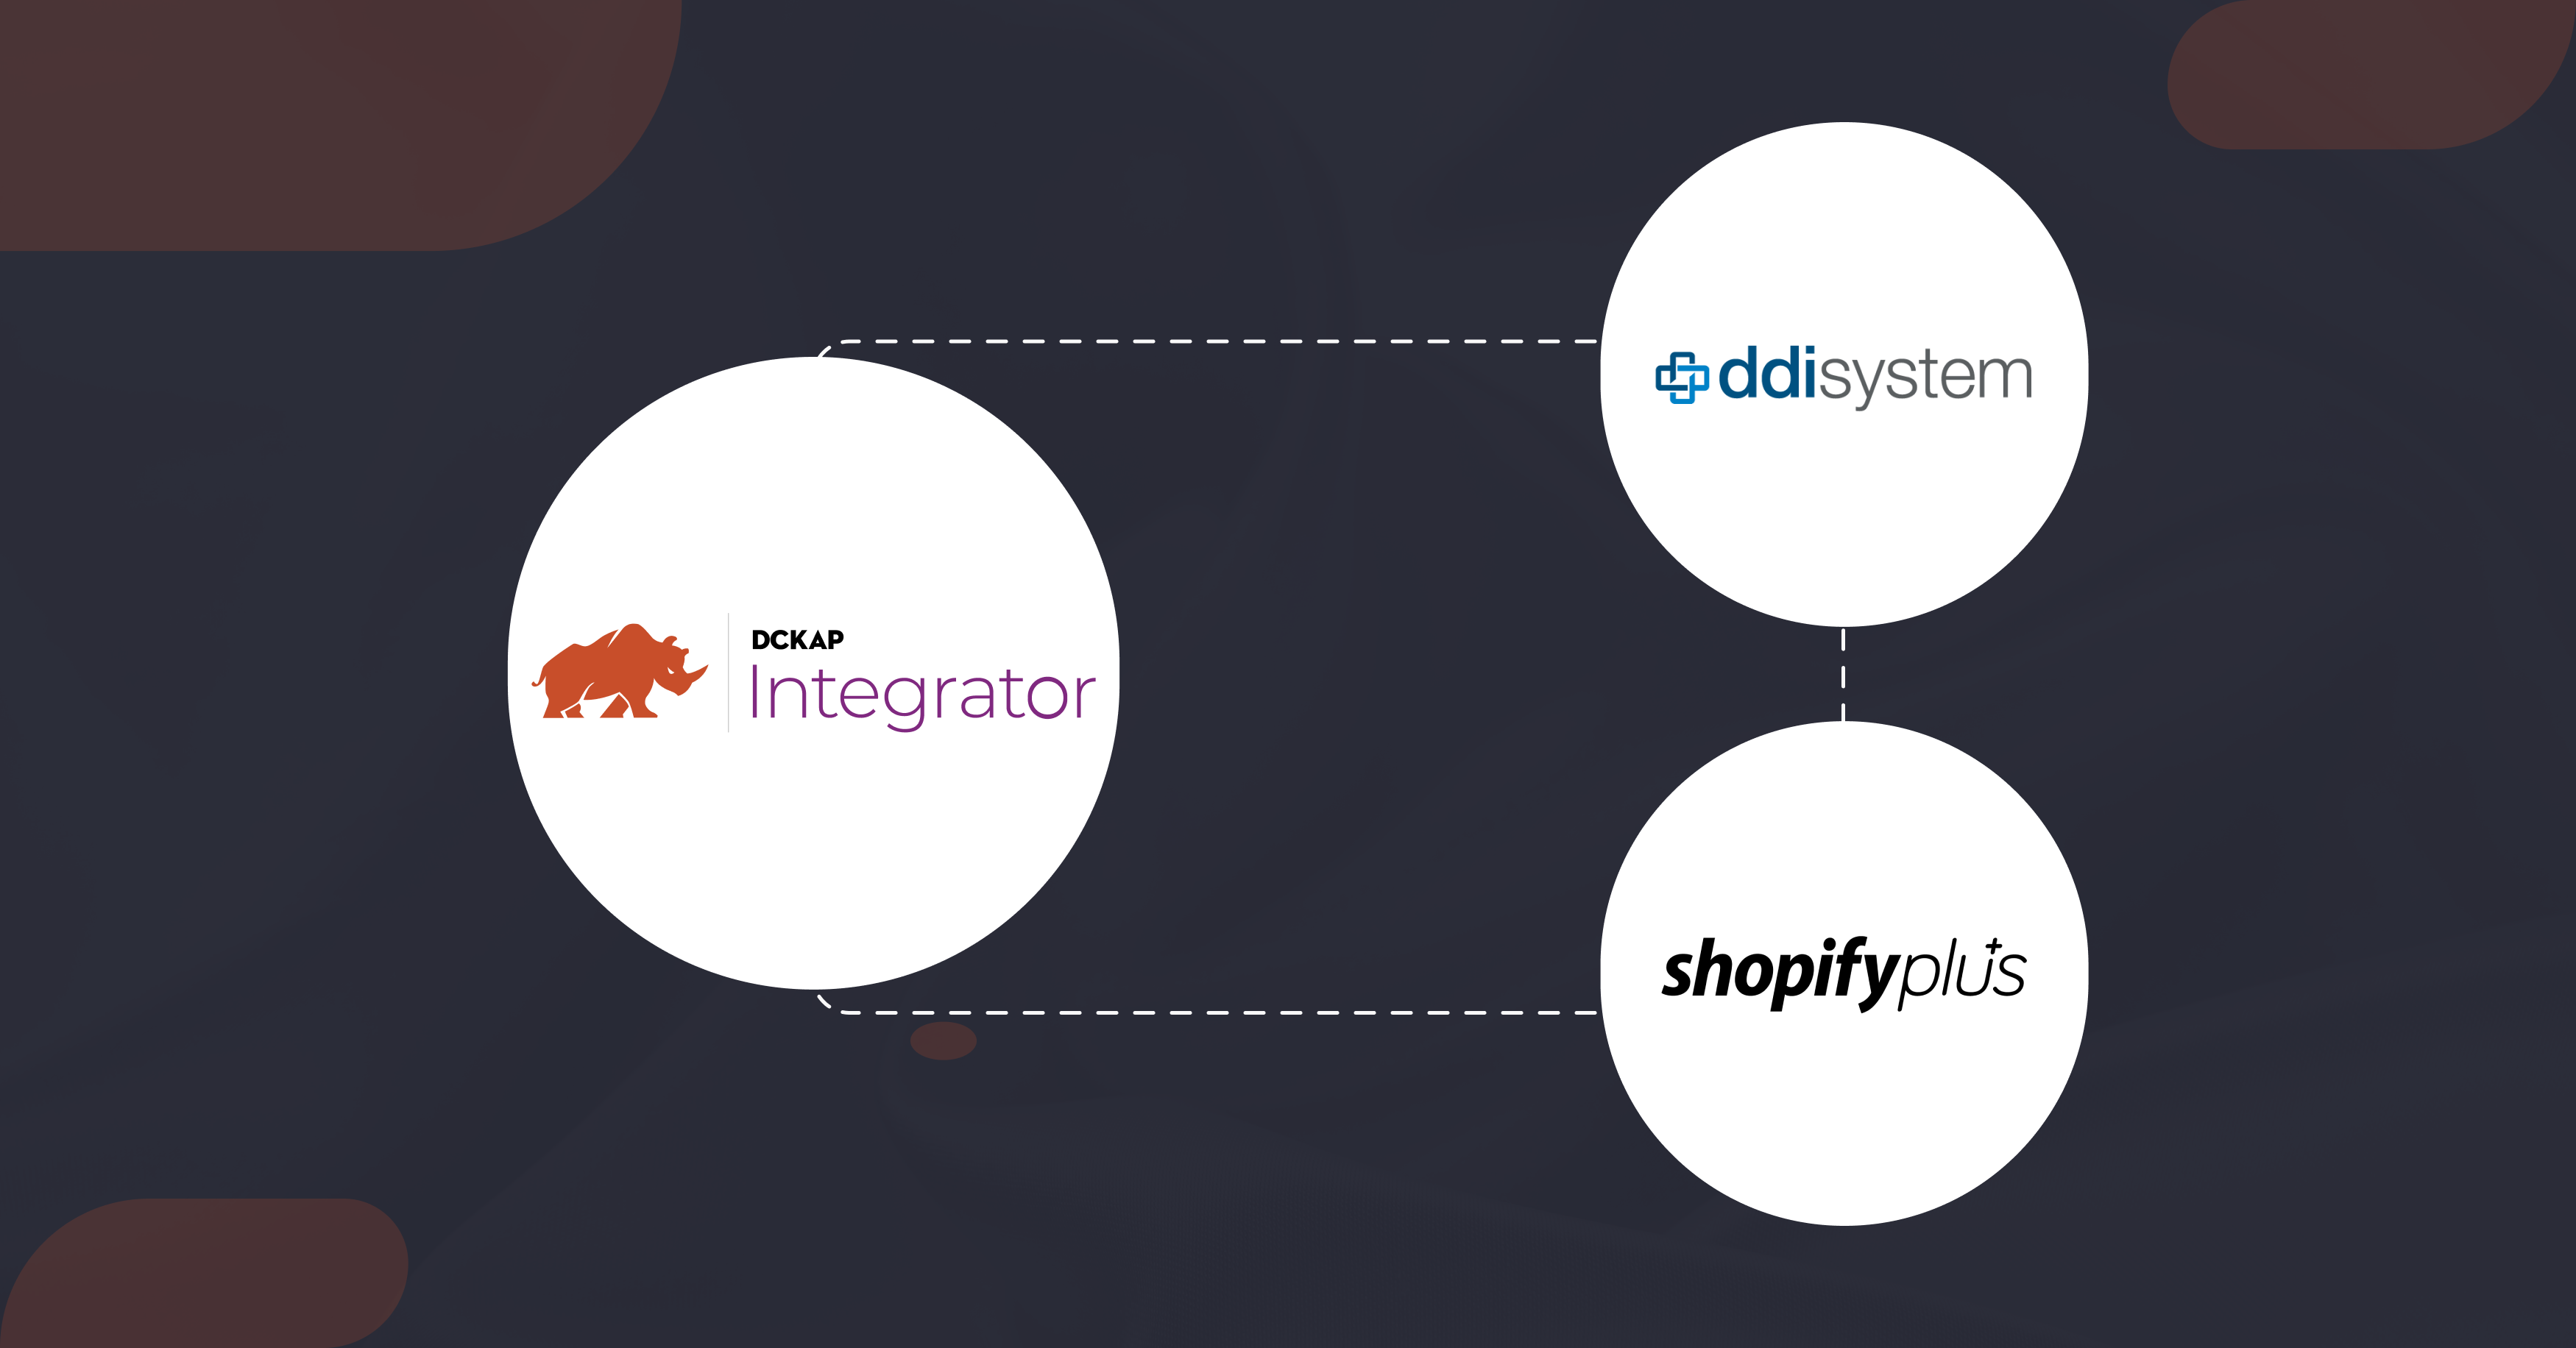 Shopify Plus & DDI System Integration